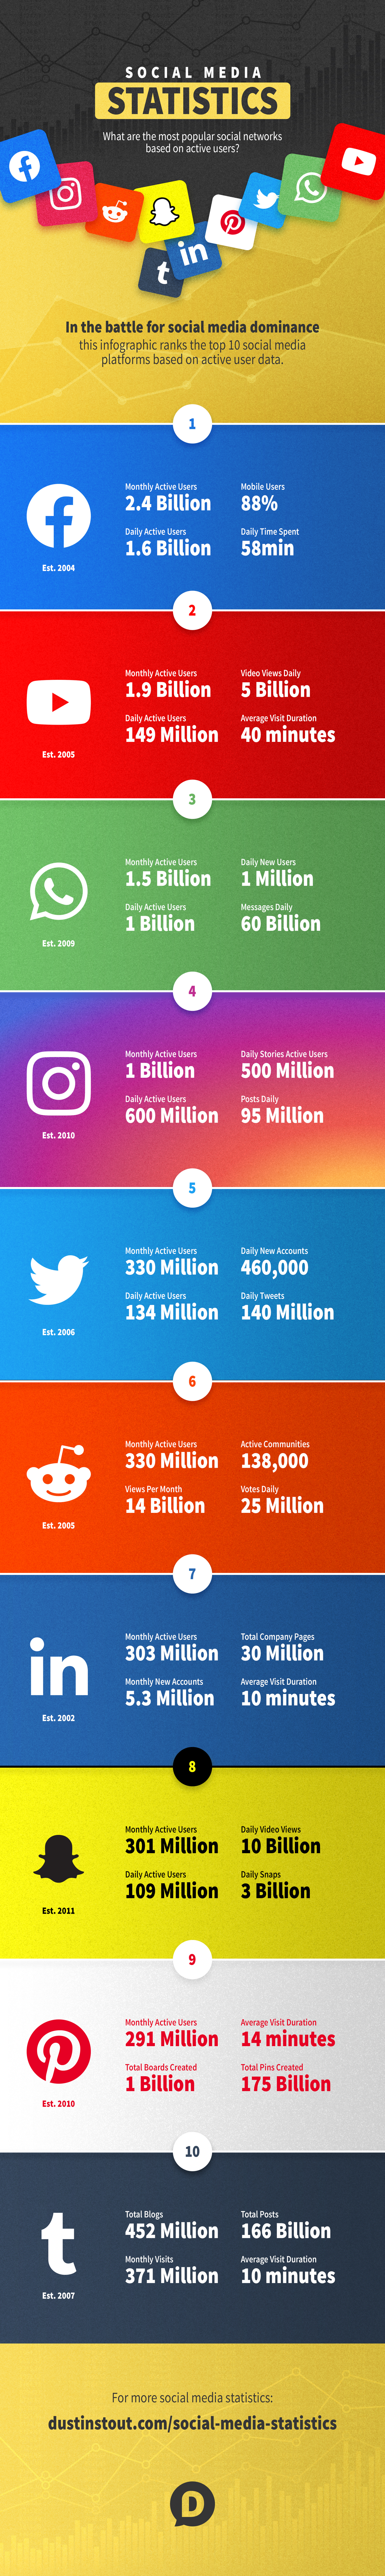 Social Media Statistics 2018 Infographic